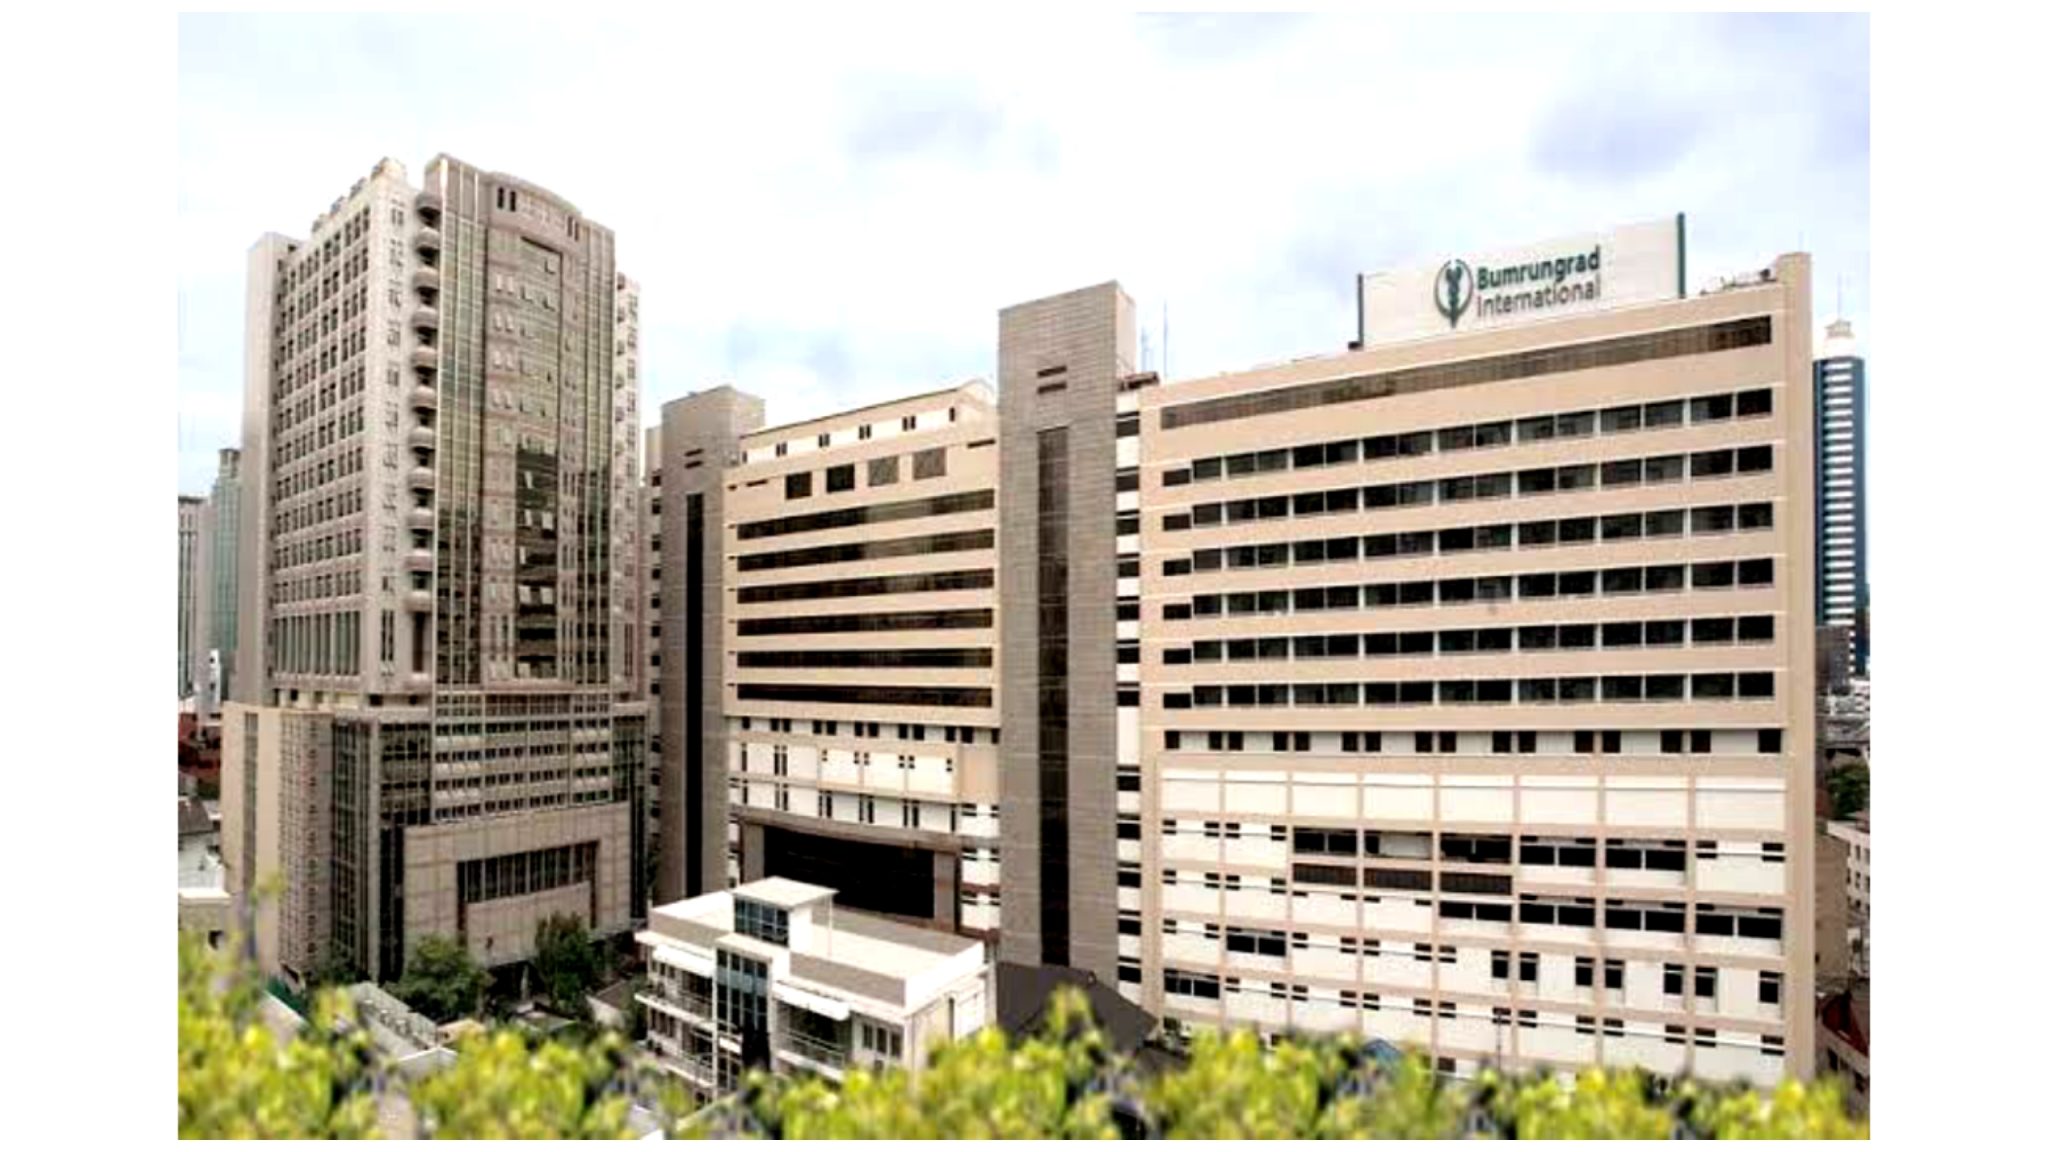 Интернационал больница. Бангкок Бумрунград. Bumrungrad International Hospital. Bumrungrad International Hospital – Bangkok, Thailand. Bangkok Hospital Bangkok.